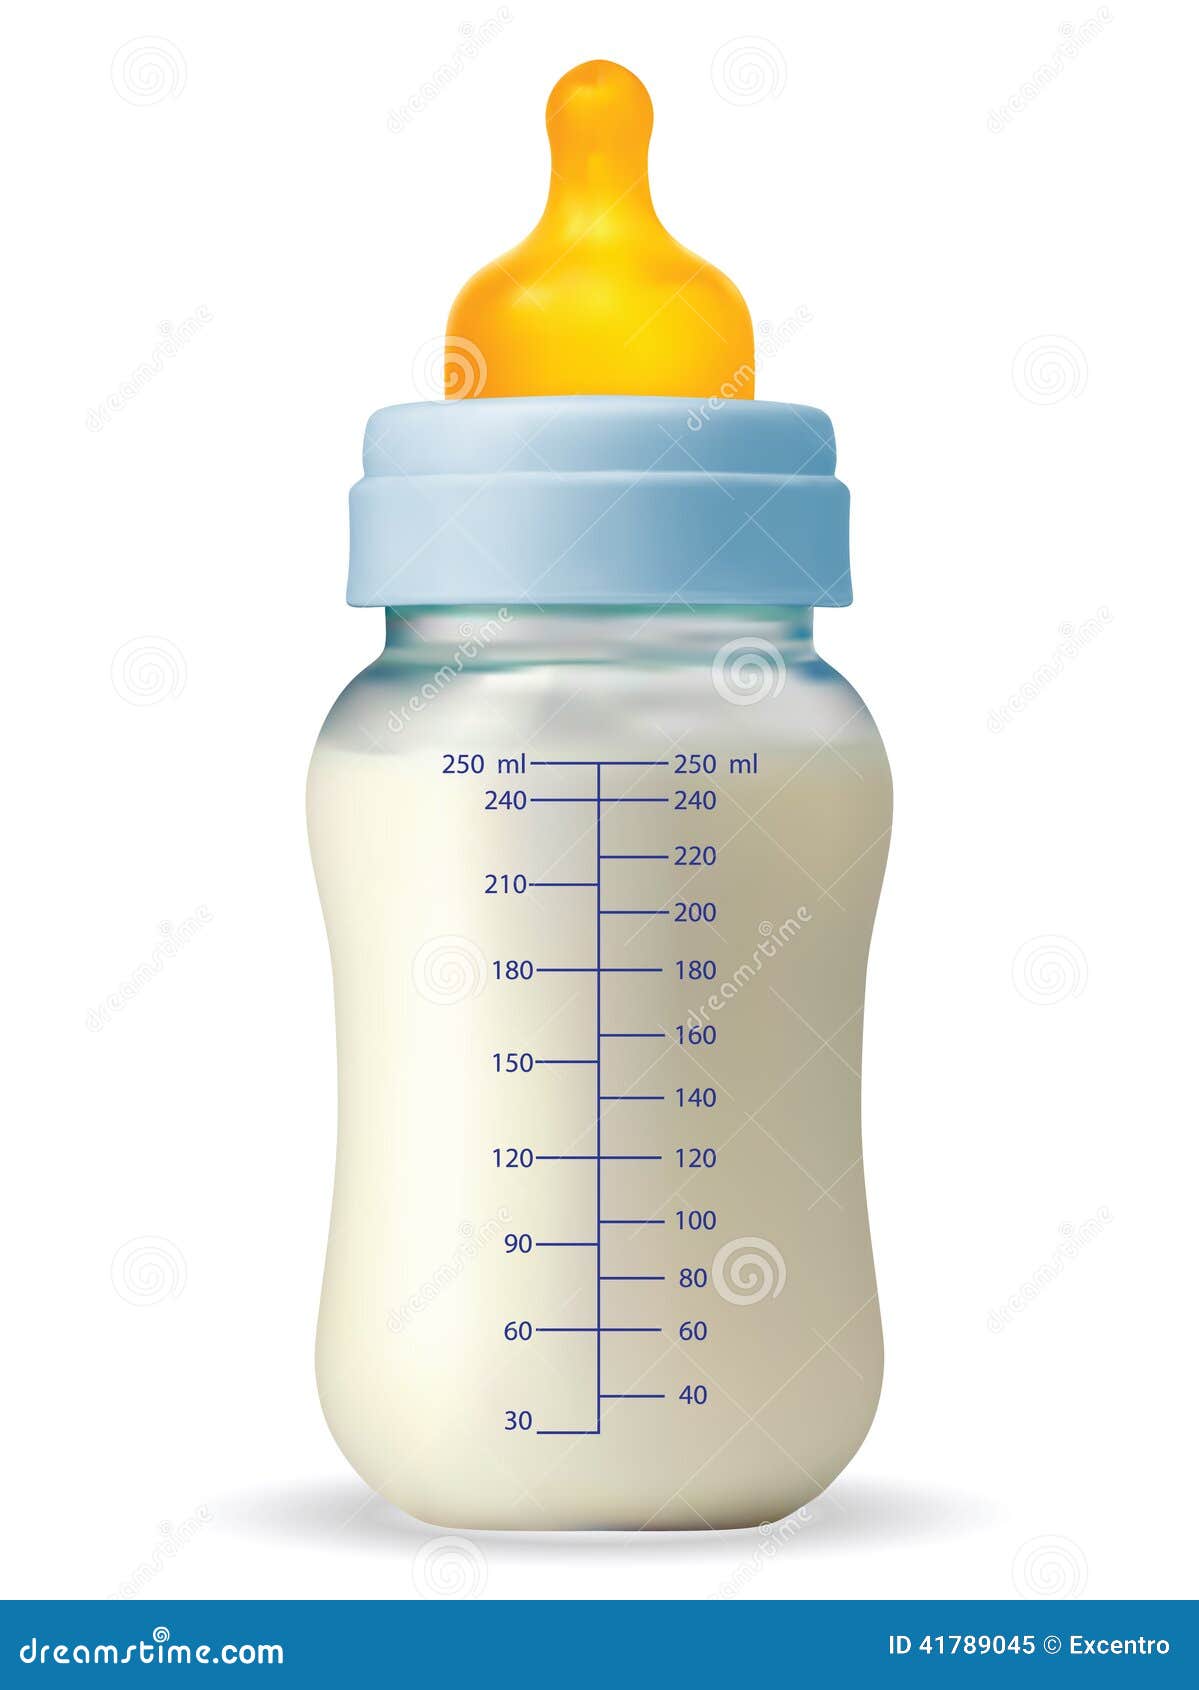 Baby milk bottle stock vector. Illustration of instrument - 41789045